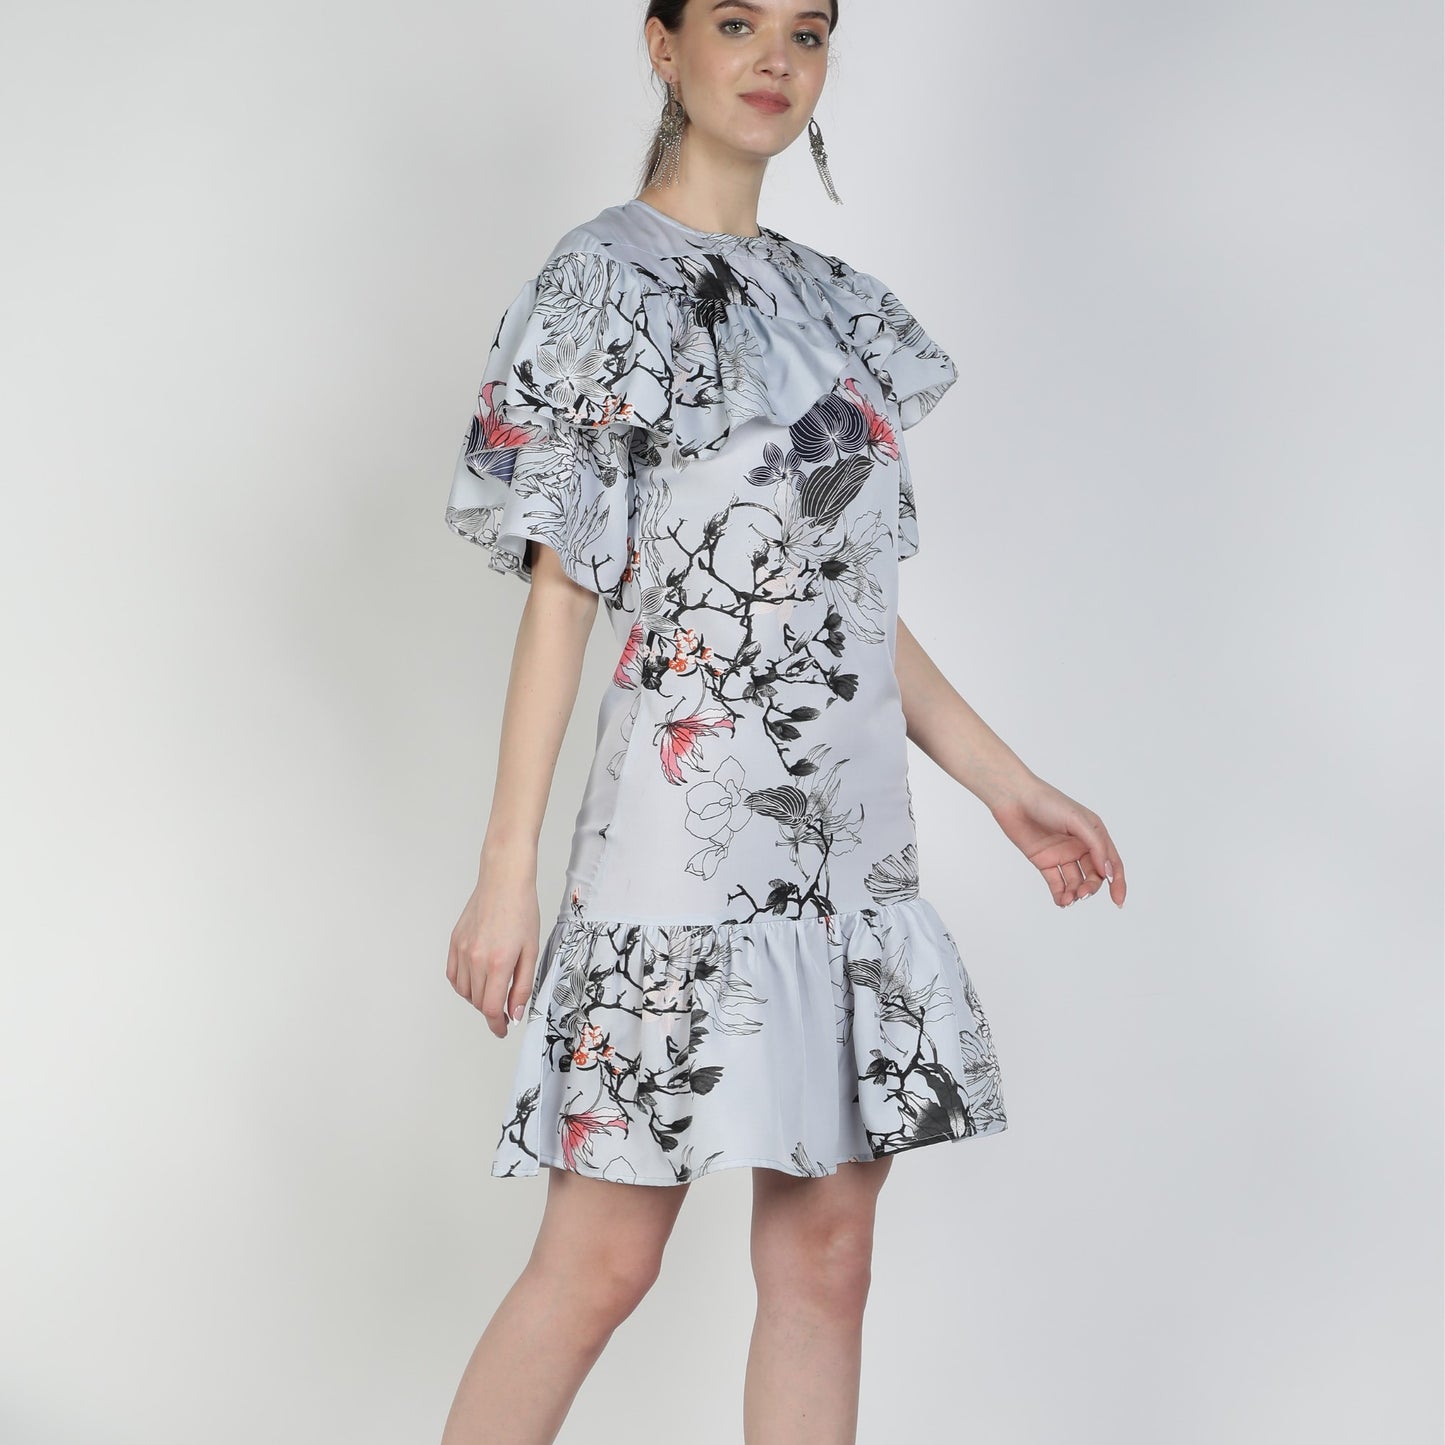 Natalia Gray Printed Dress